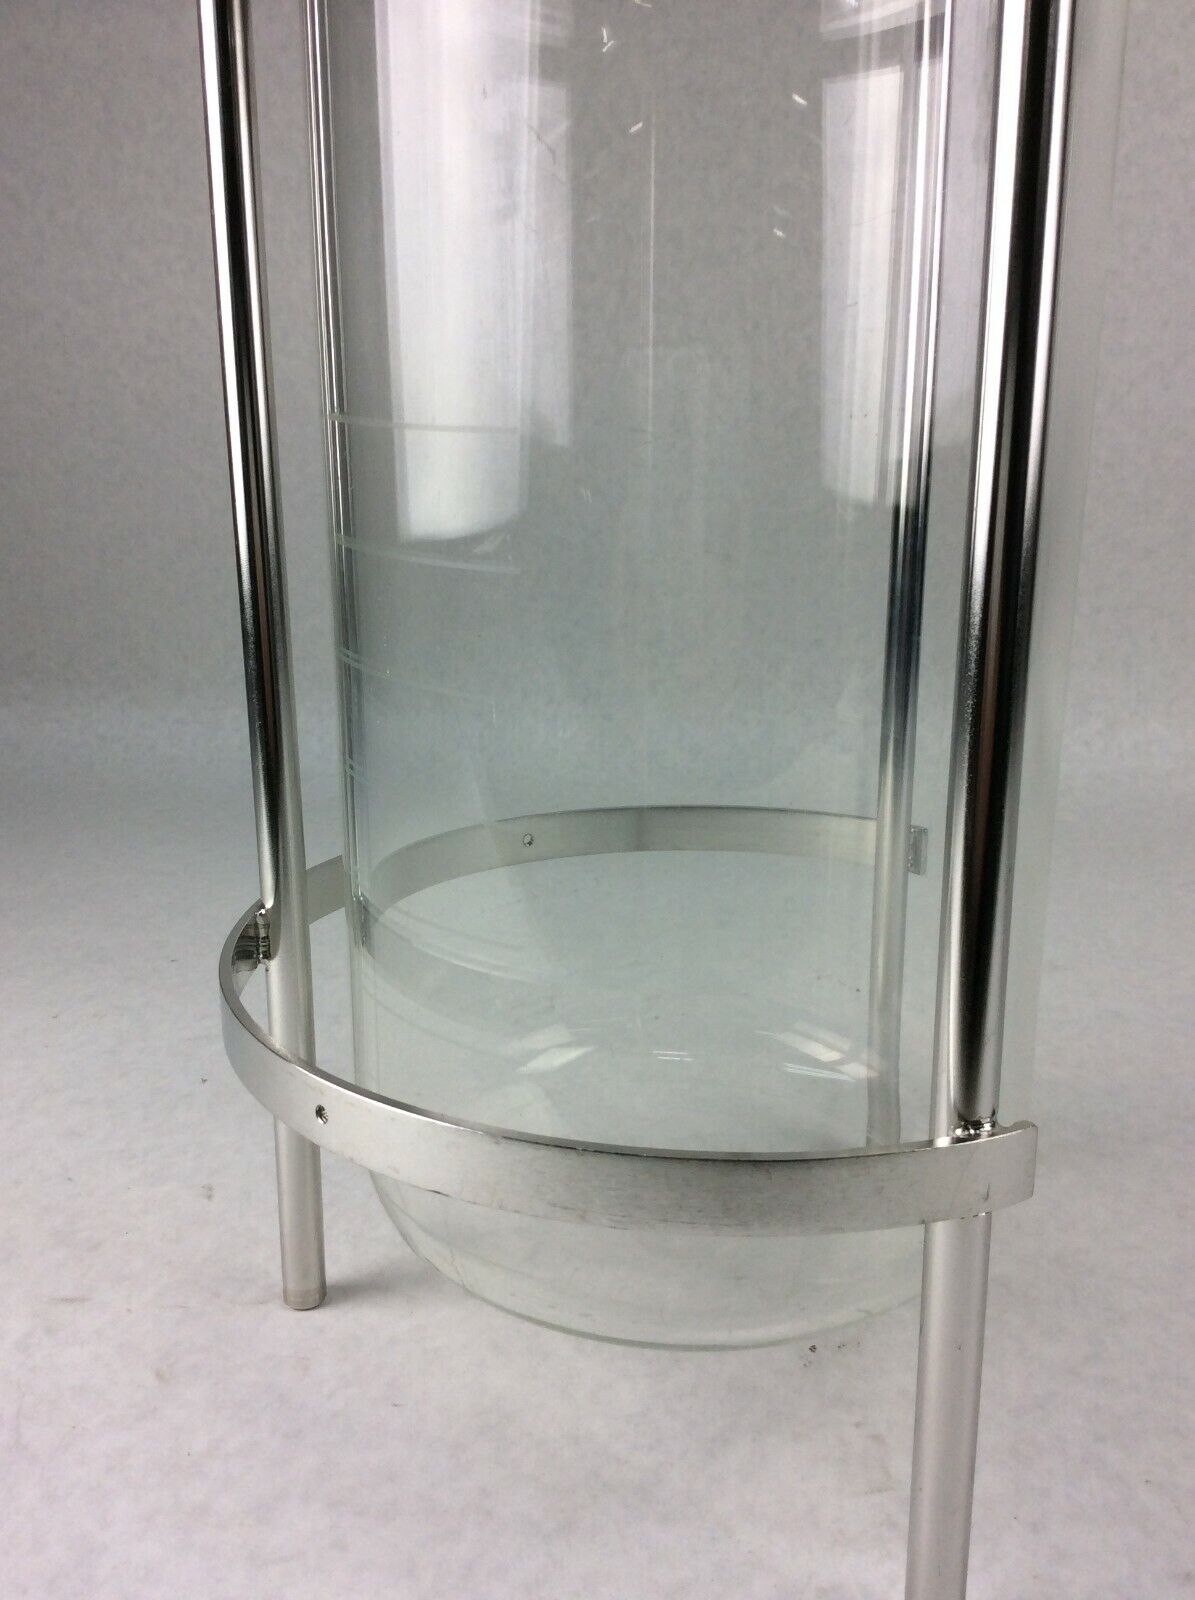 Sartorius Stedim 4L Glass Jacketed Vessel Bioreactor Bio Reactor - Bad Thread